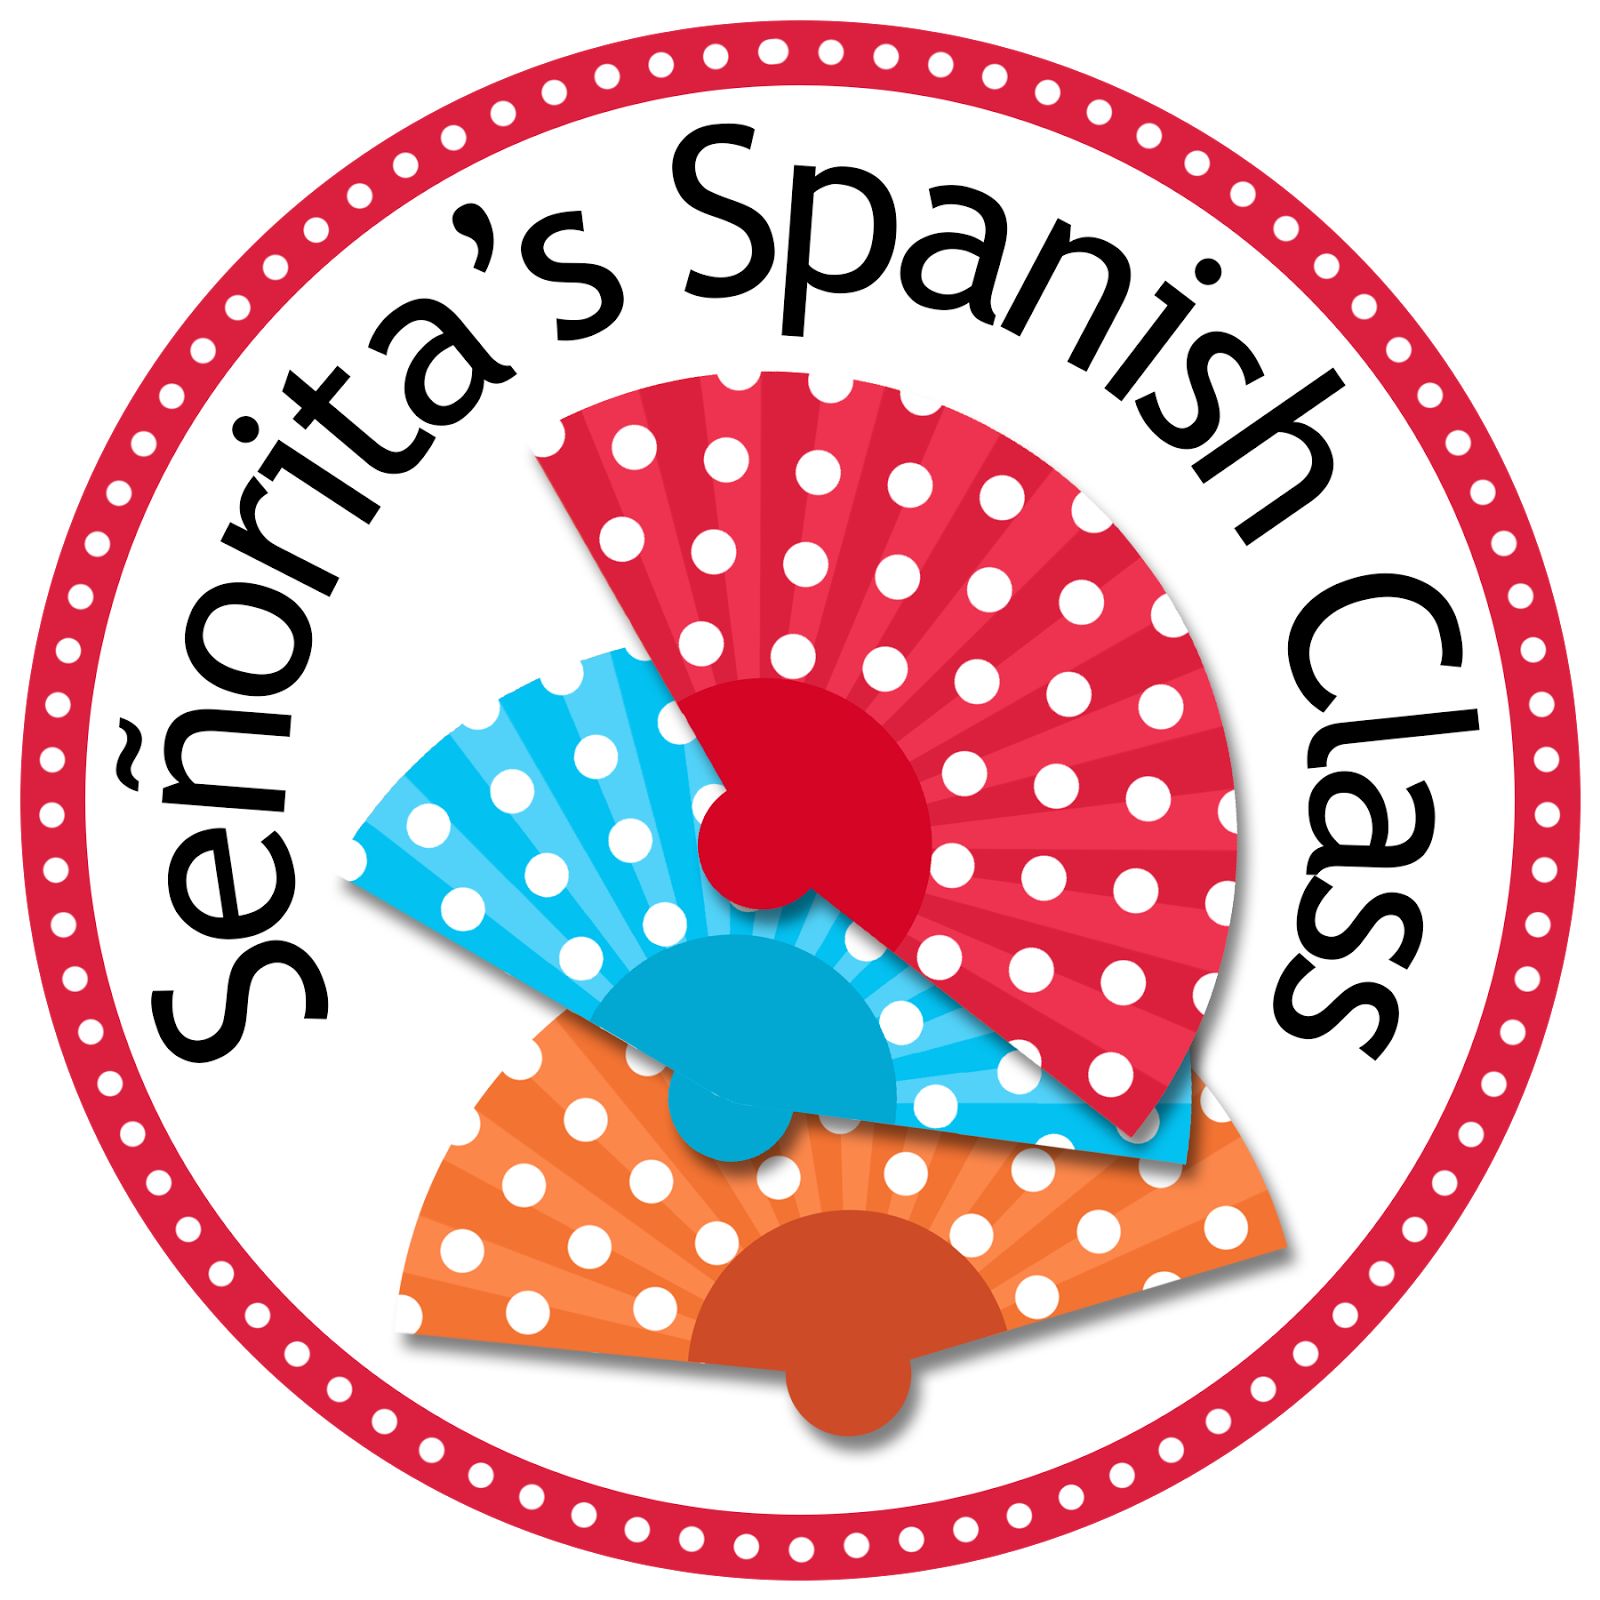 Señorita's Spanish Class